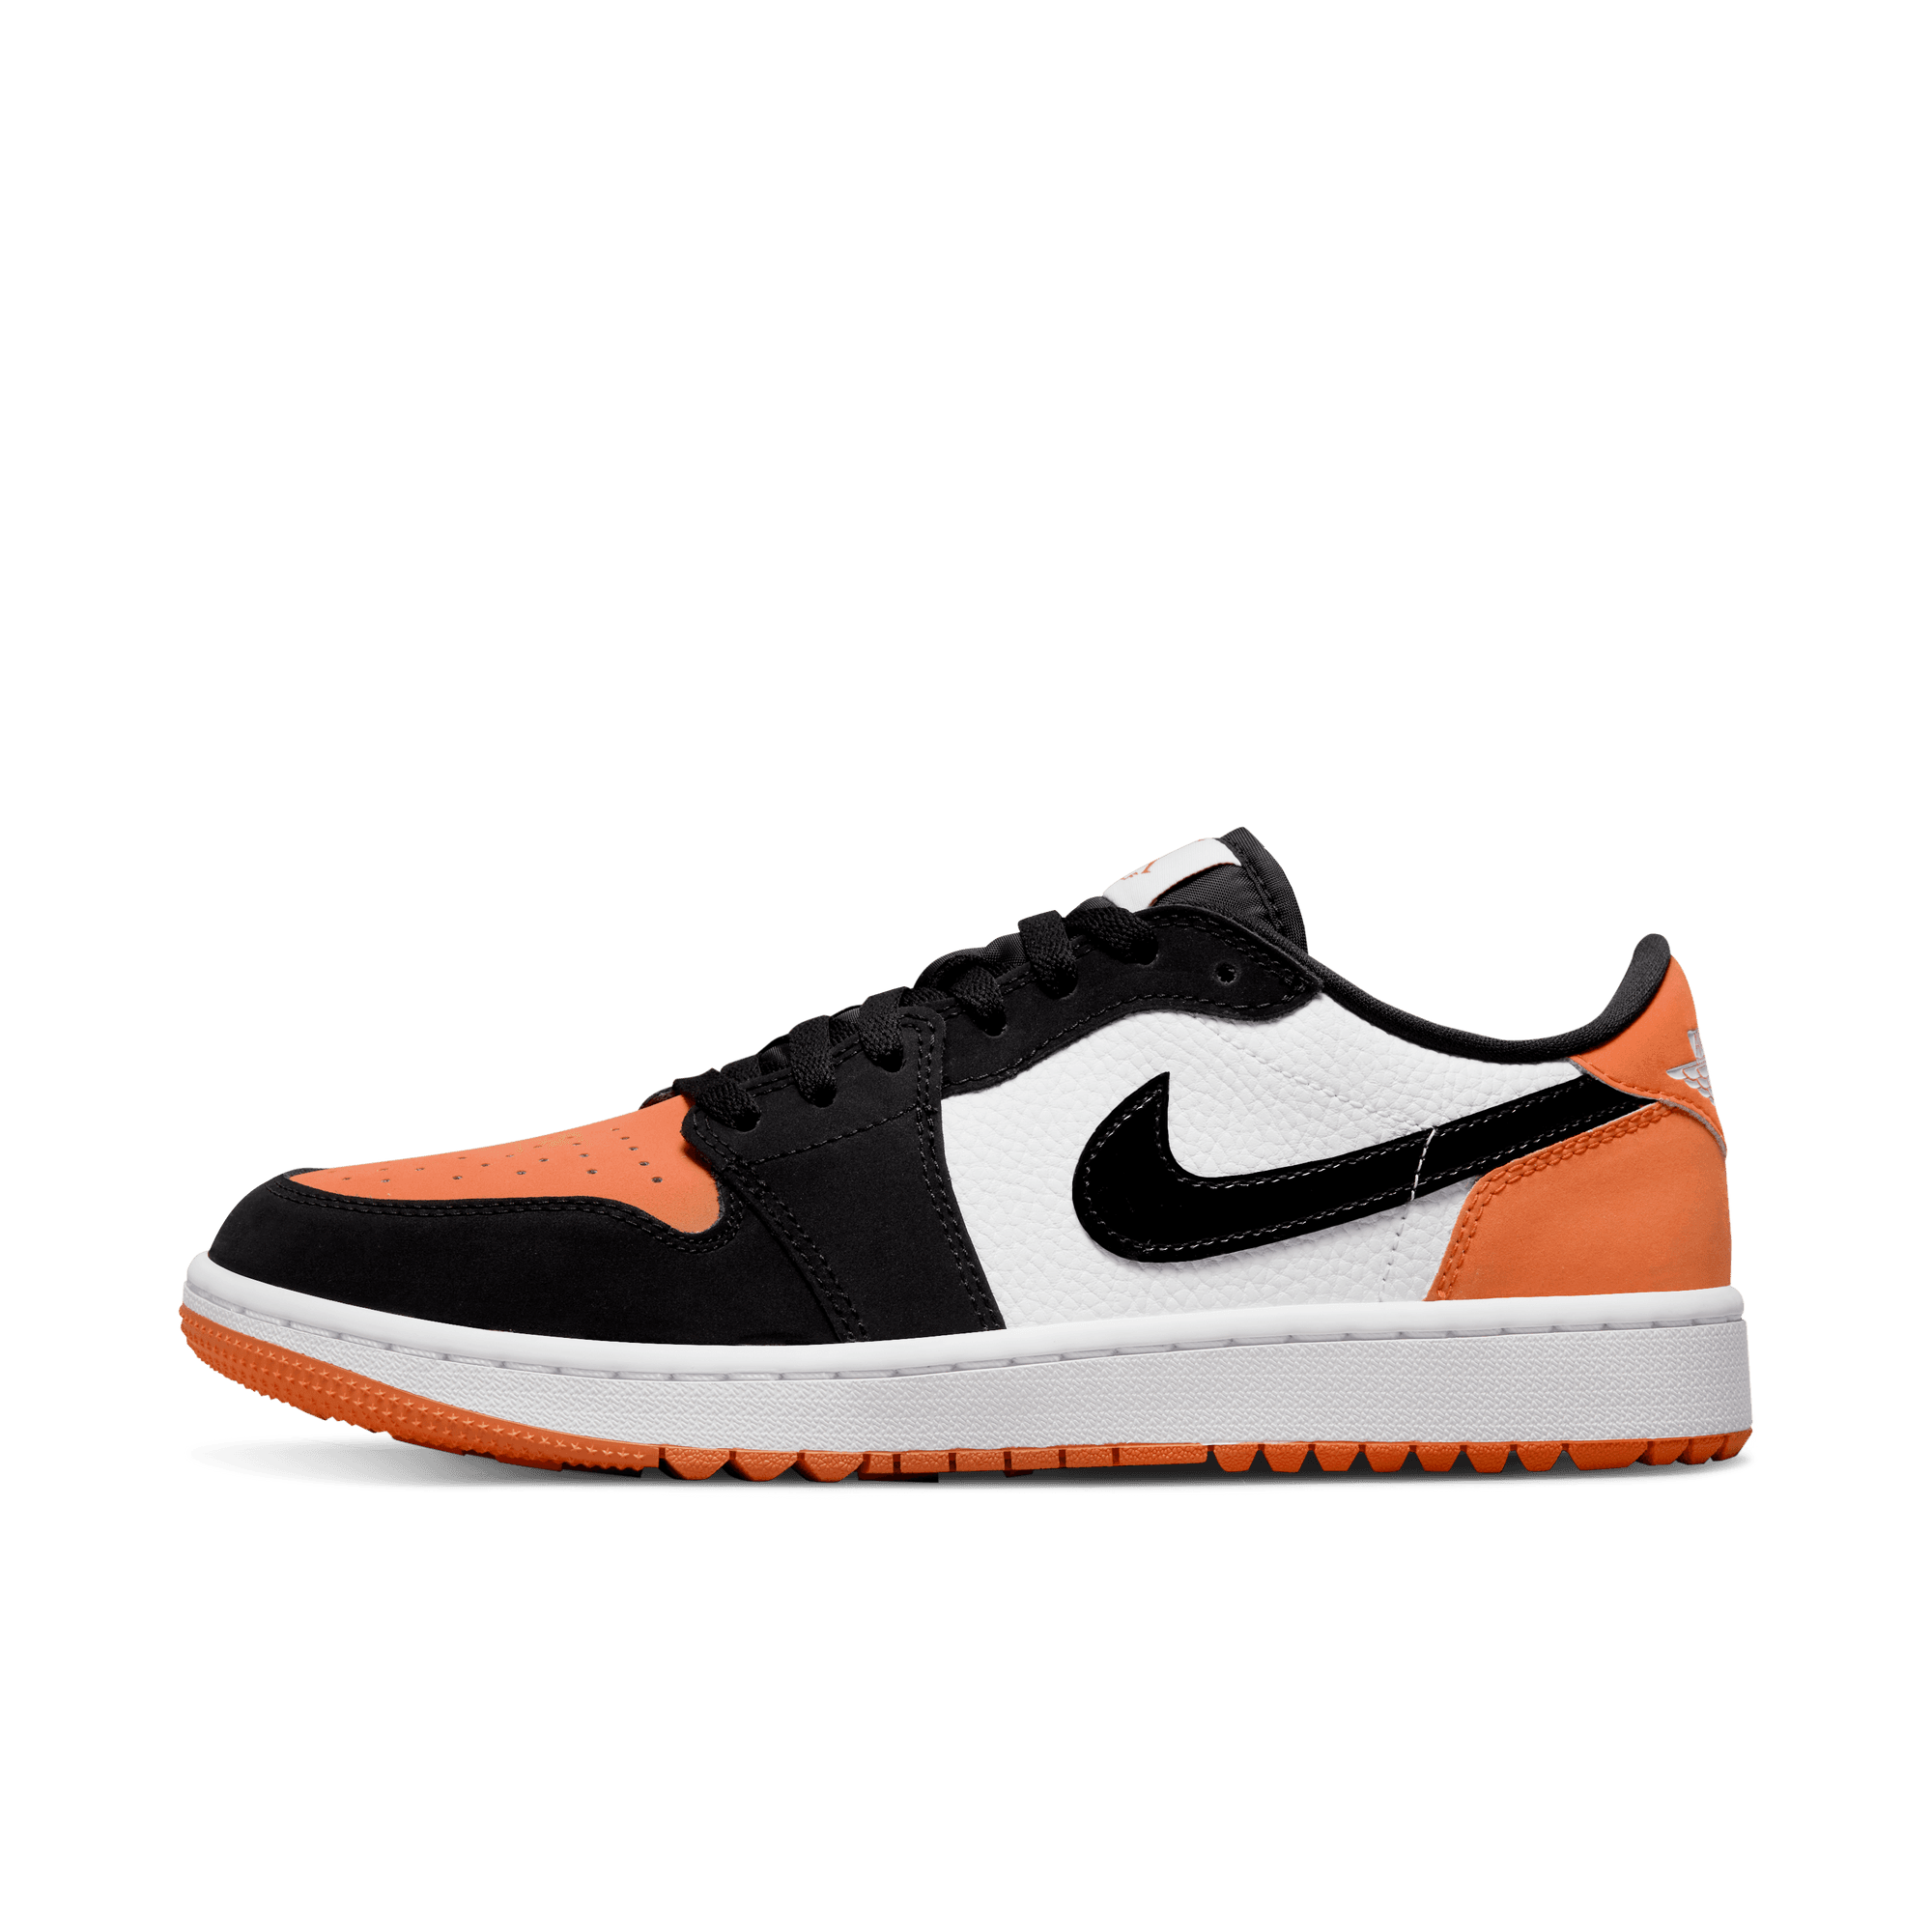 Air Jordan 1 Low G Spikeless Golf Shoe - Black/Orange | NIKE | Golf 